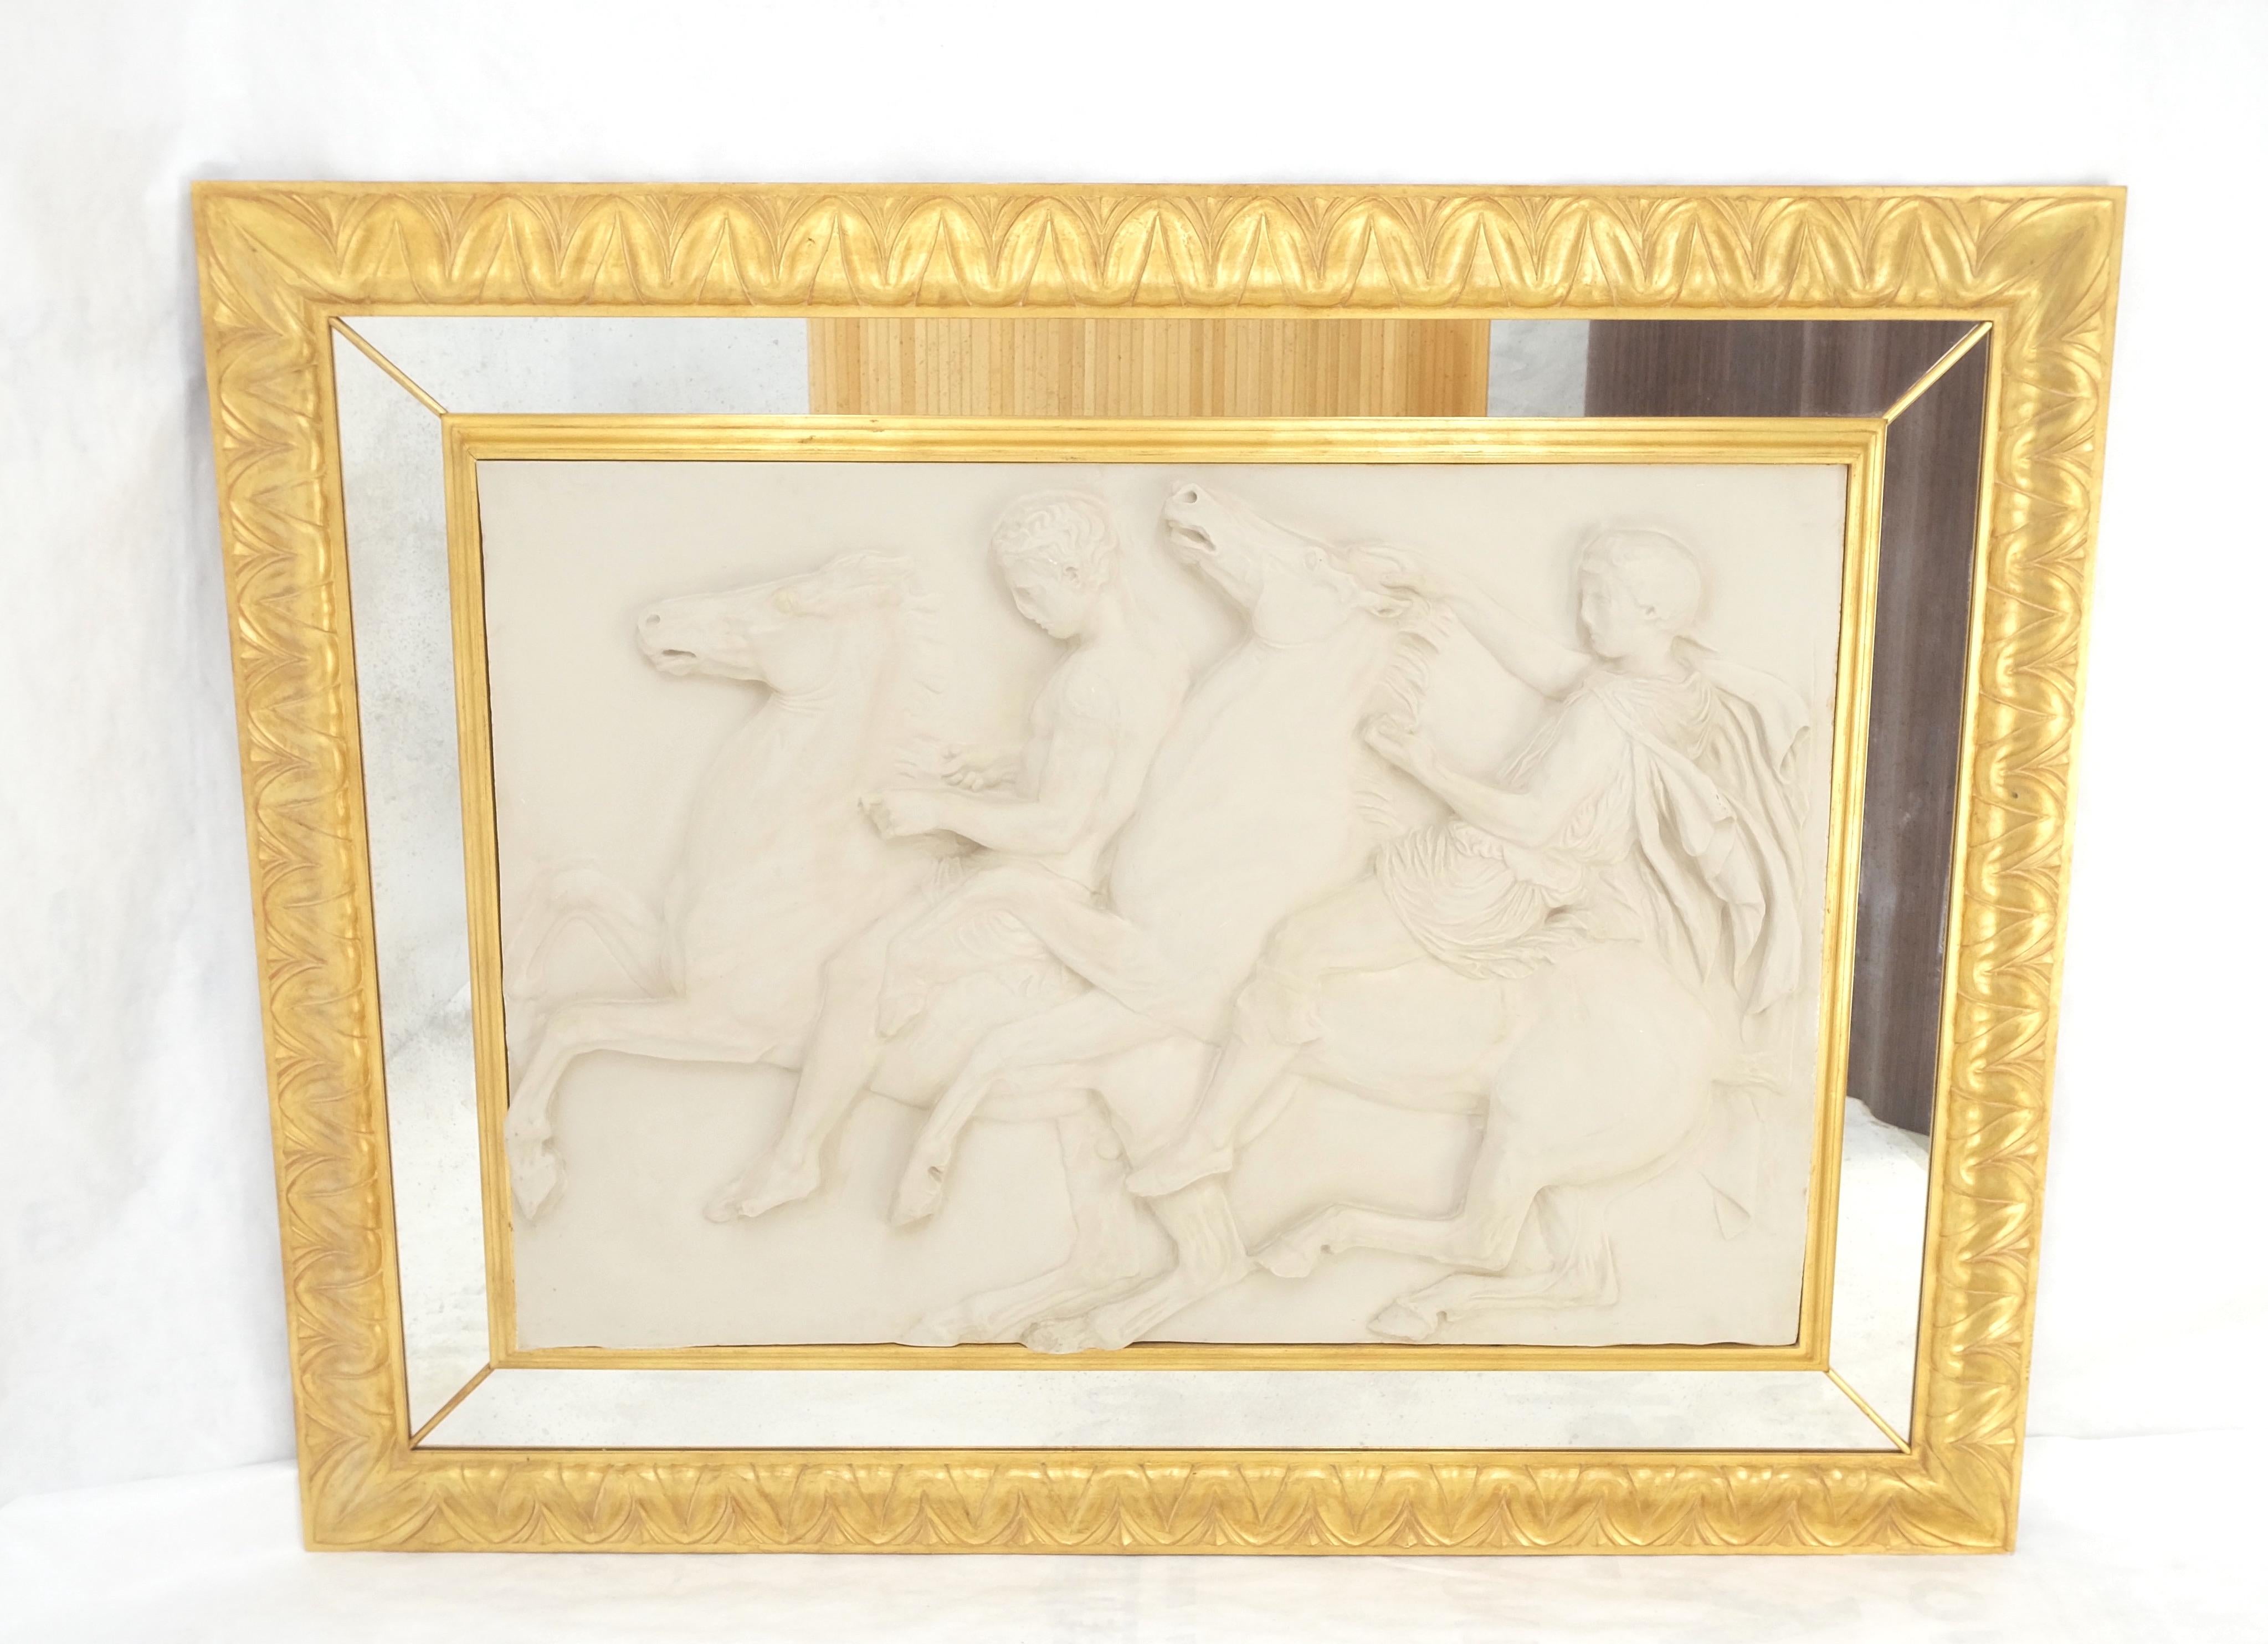 Large Carved Alabaster Horse Riding Scene Wall Plaque In Gold Leaf Mirror Frame 8